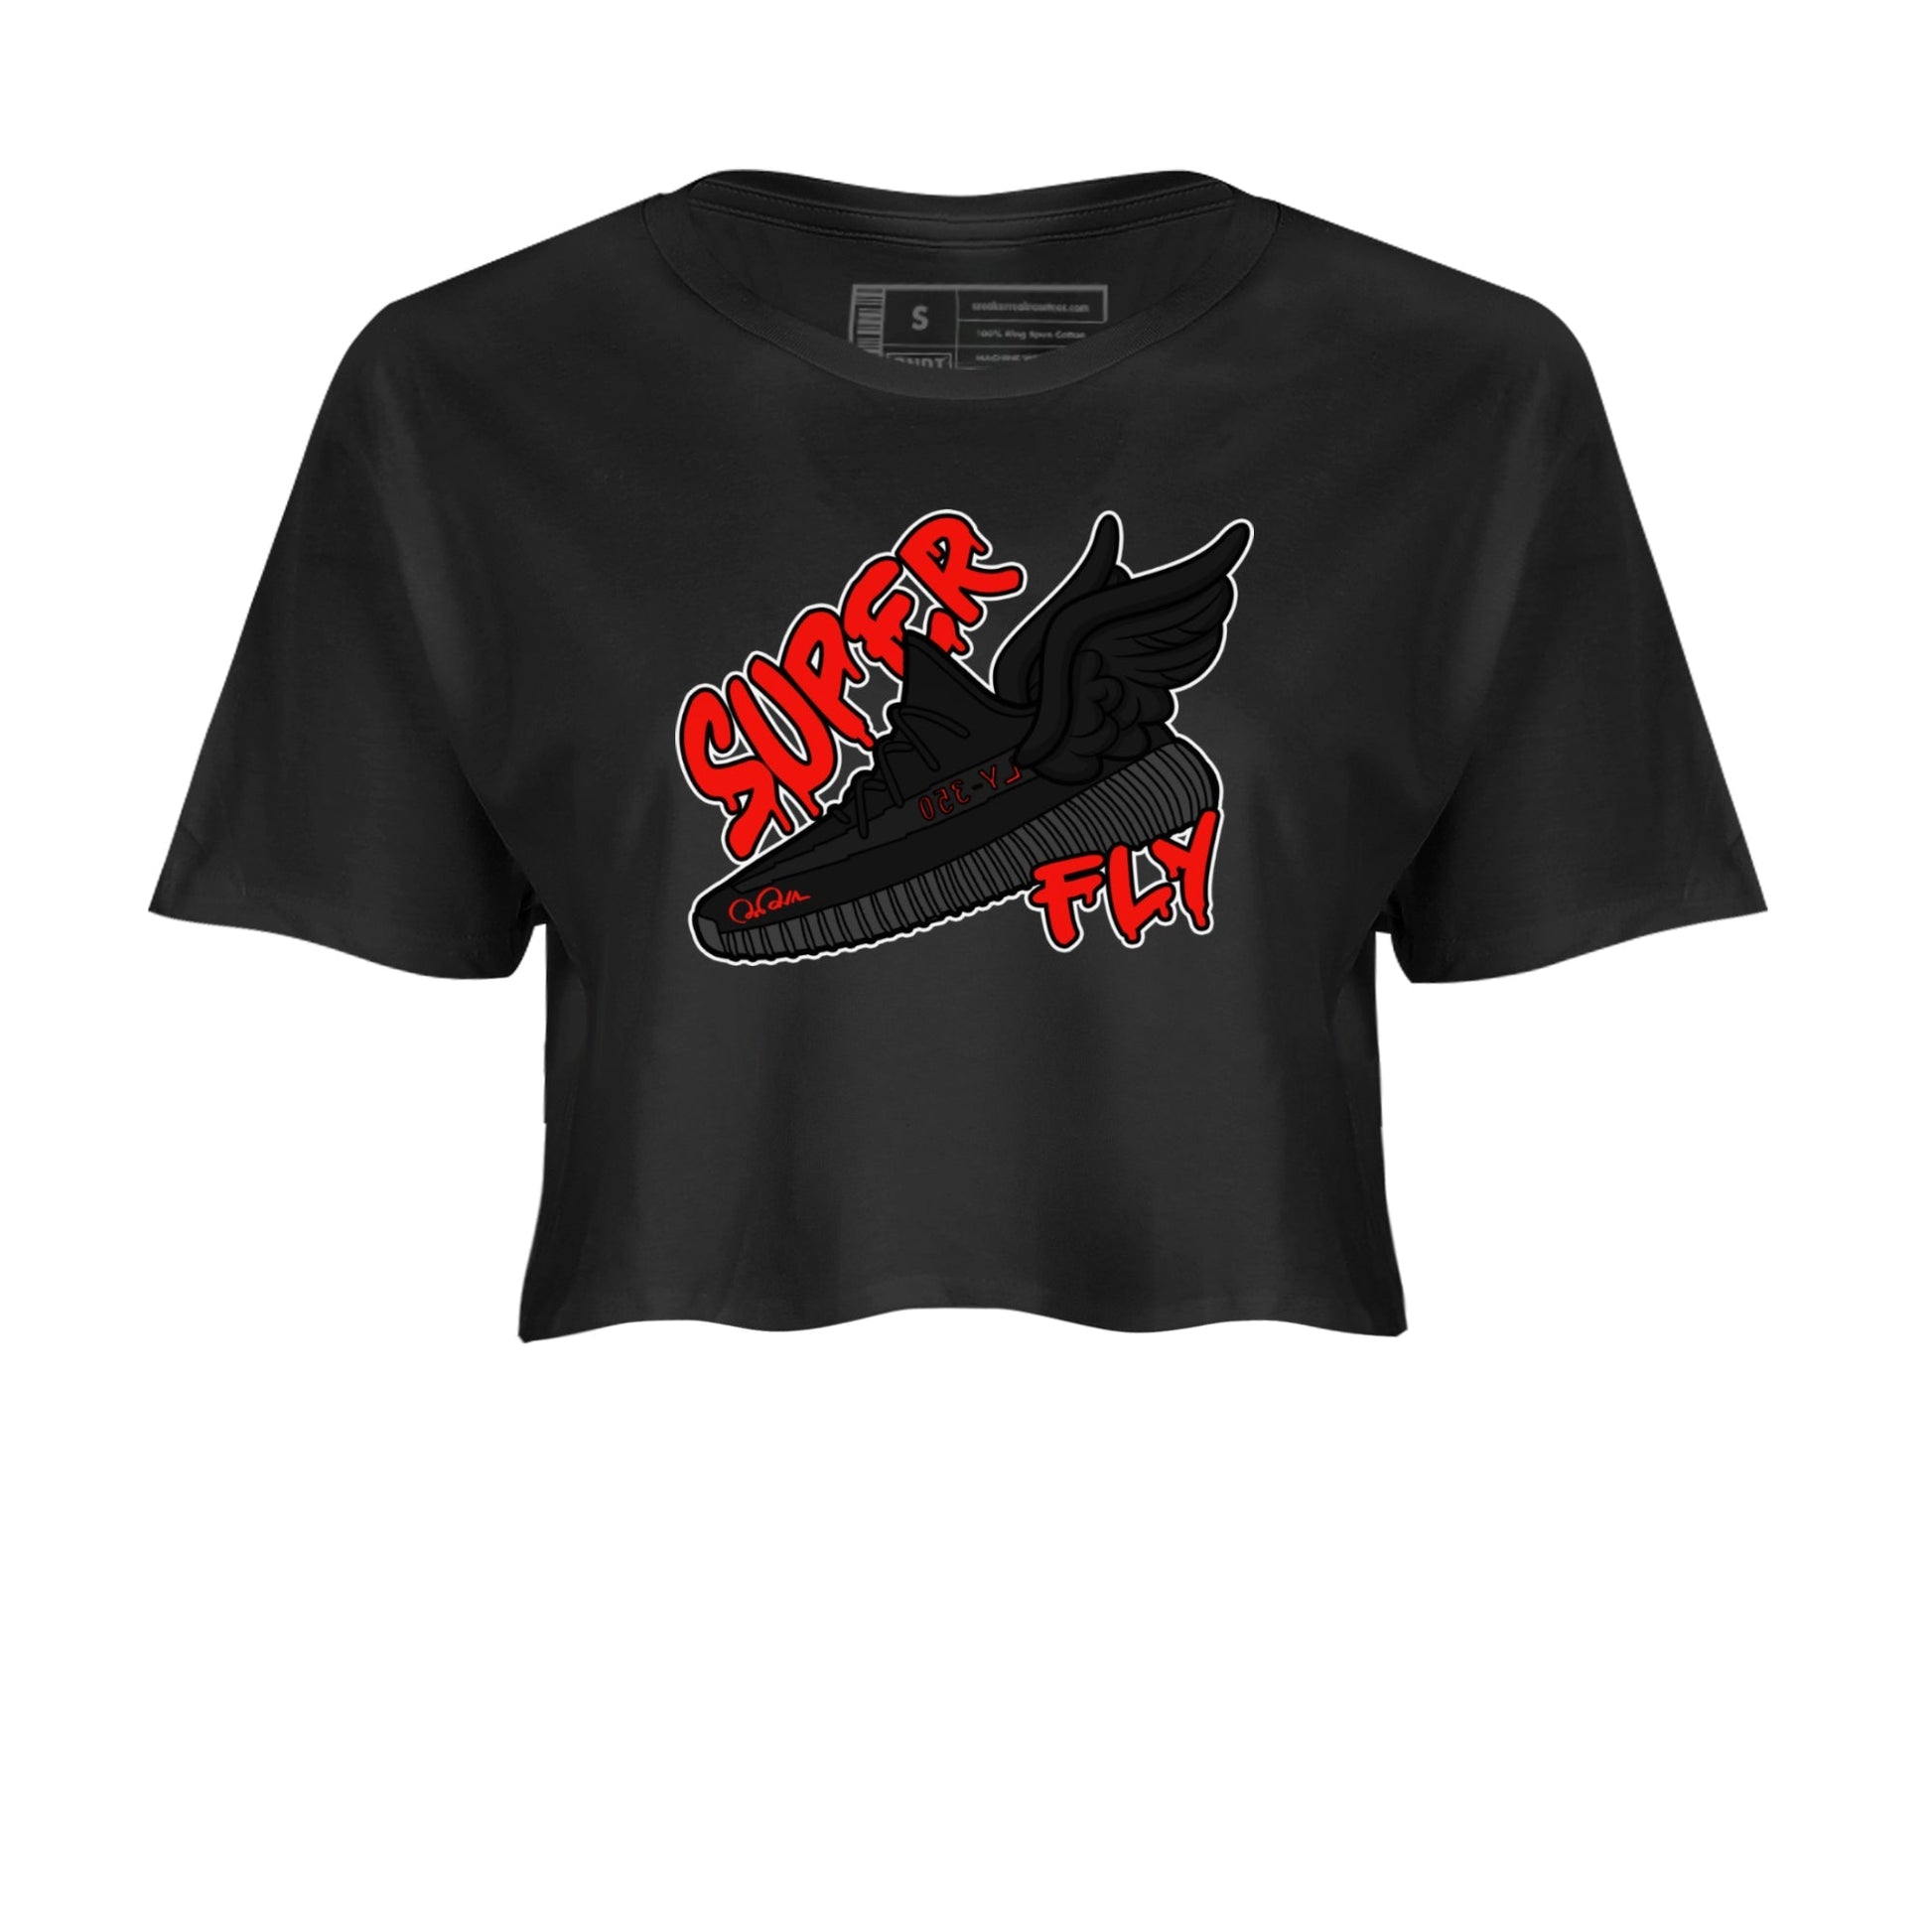 Yeezy 350 Bred shirt to match jordans Super Fly Streetwear Sneaker Shirt Adidas Yeezy Boost V2 350 Bred Drip Gear Zone Sneaker Matching Clothing Black 2 Crop T-Shirt